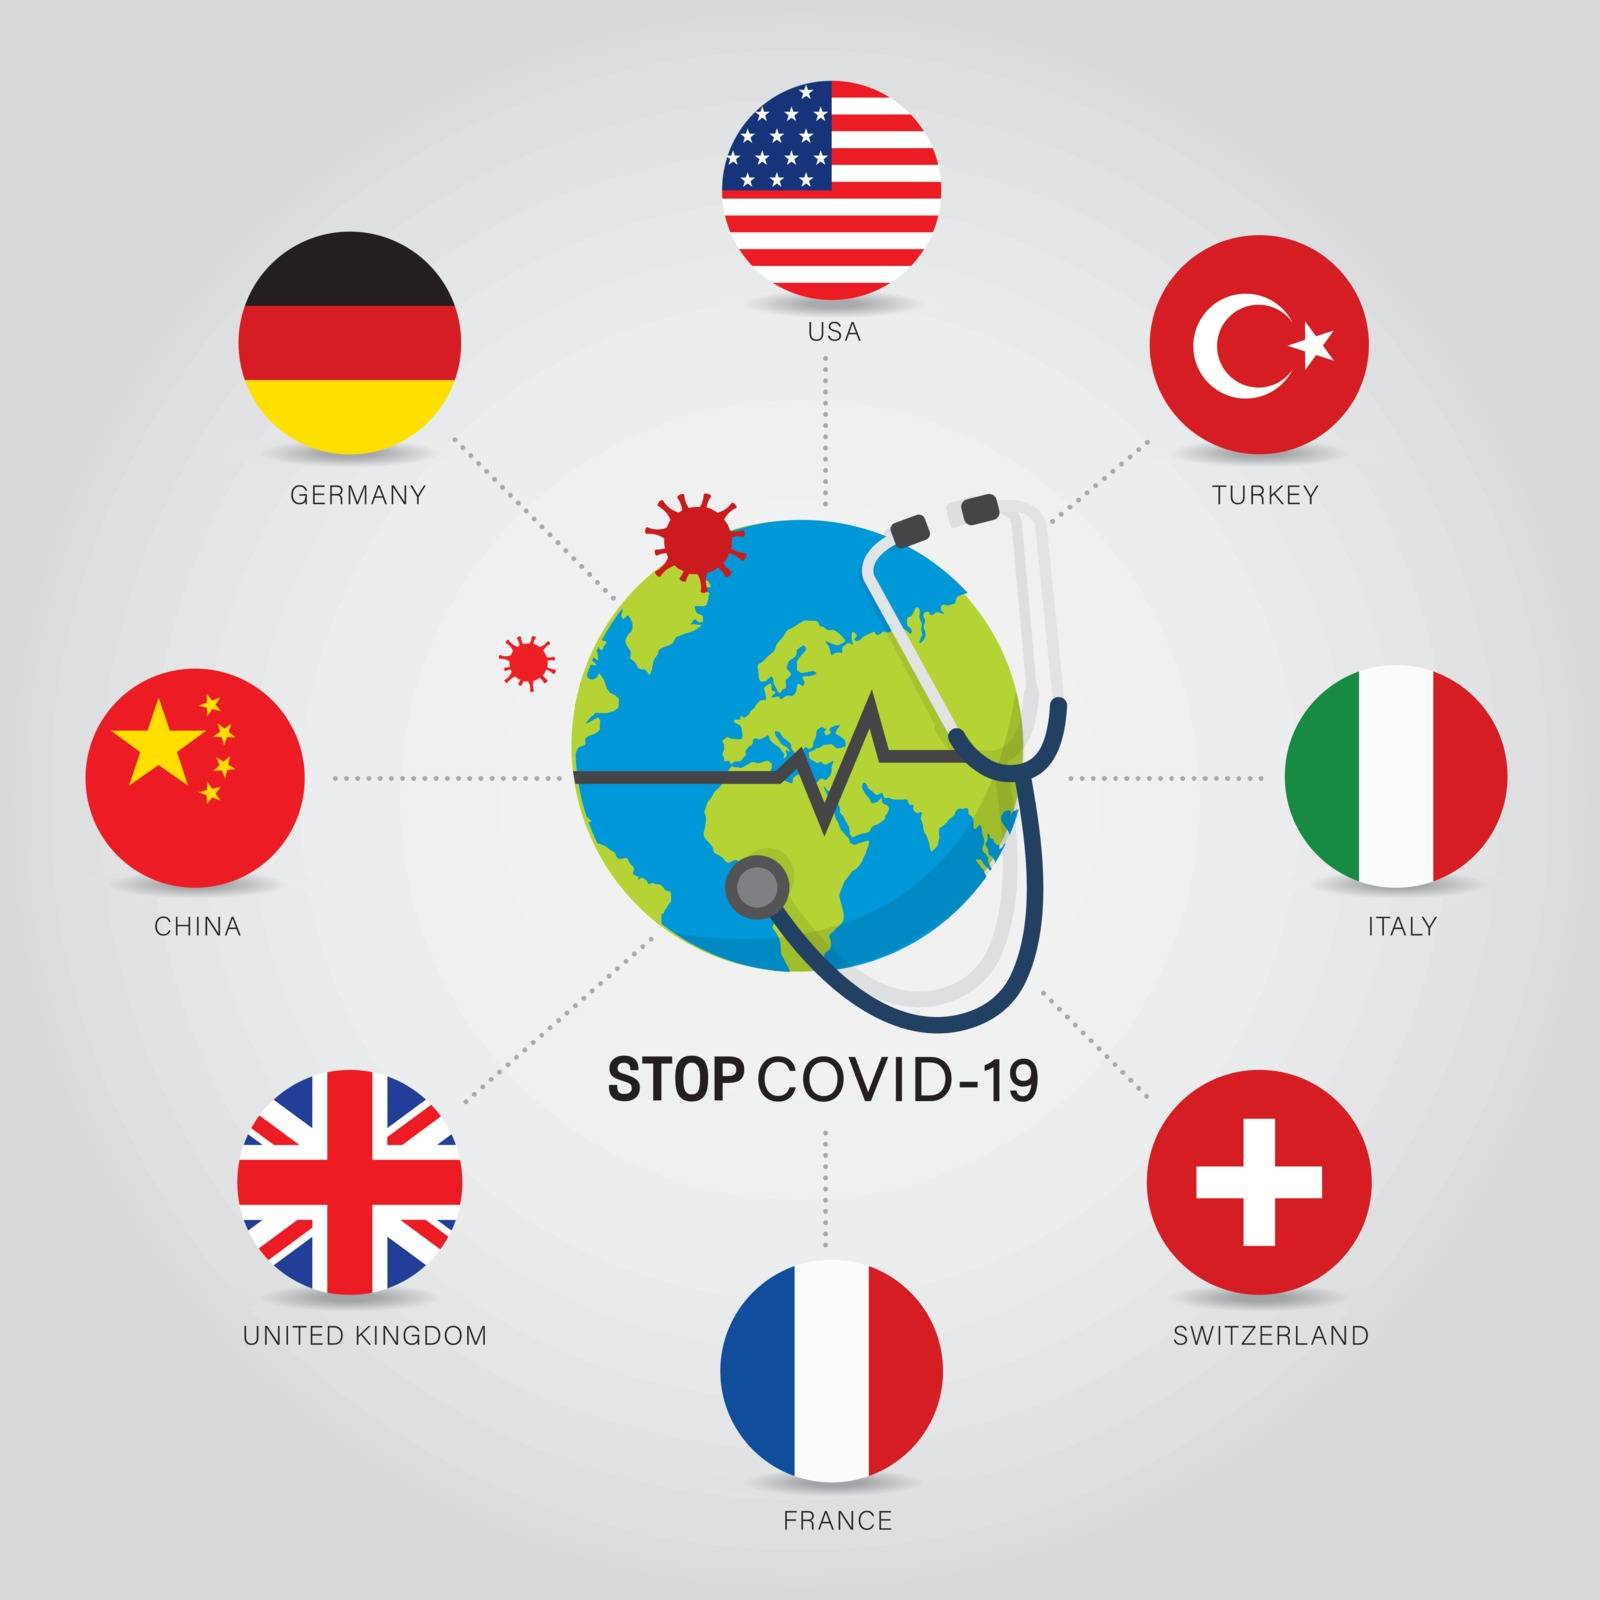 Coronavirus COVID-19 Flu spreading around the world. Stop Covid-19 Vector illustration. by Ienjoyeverytime